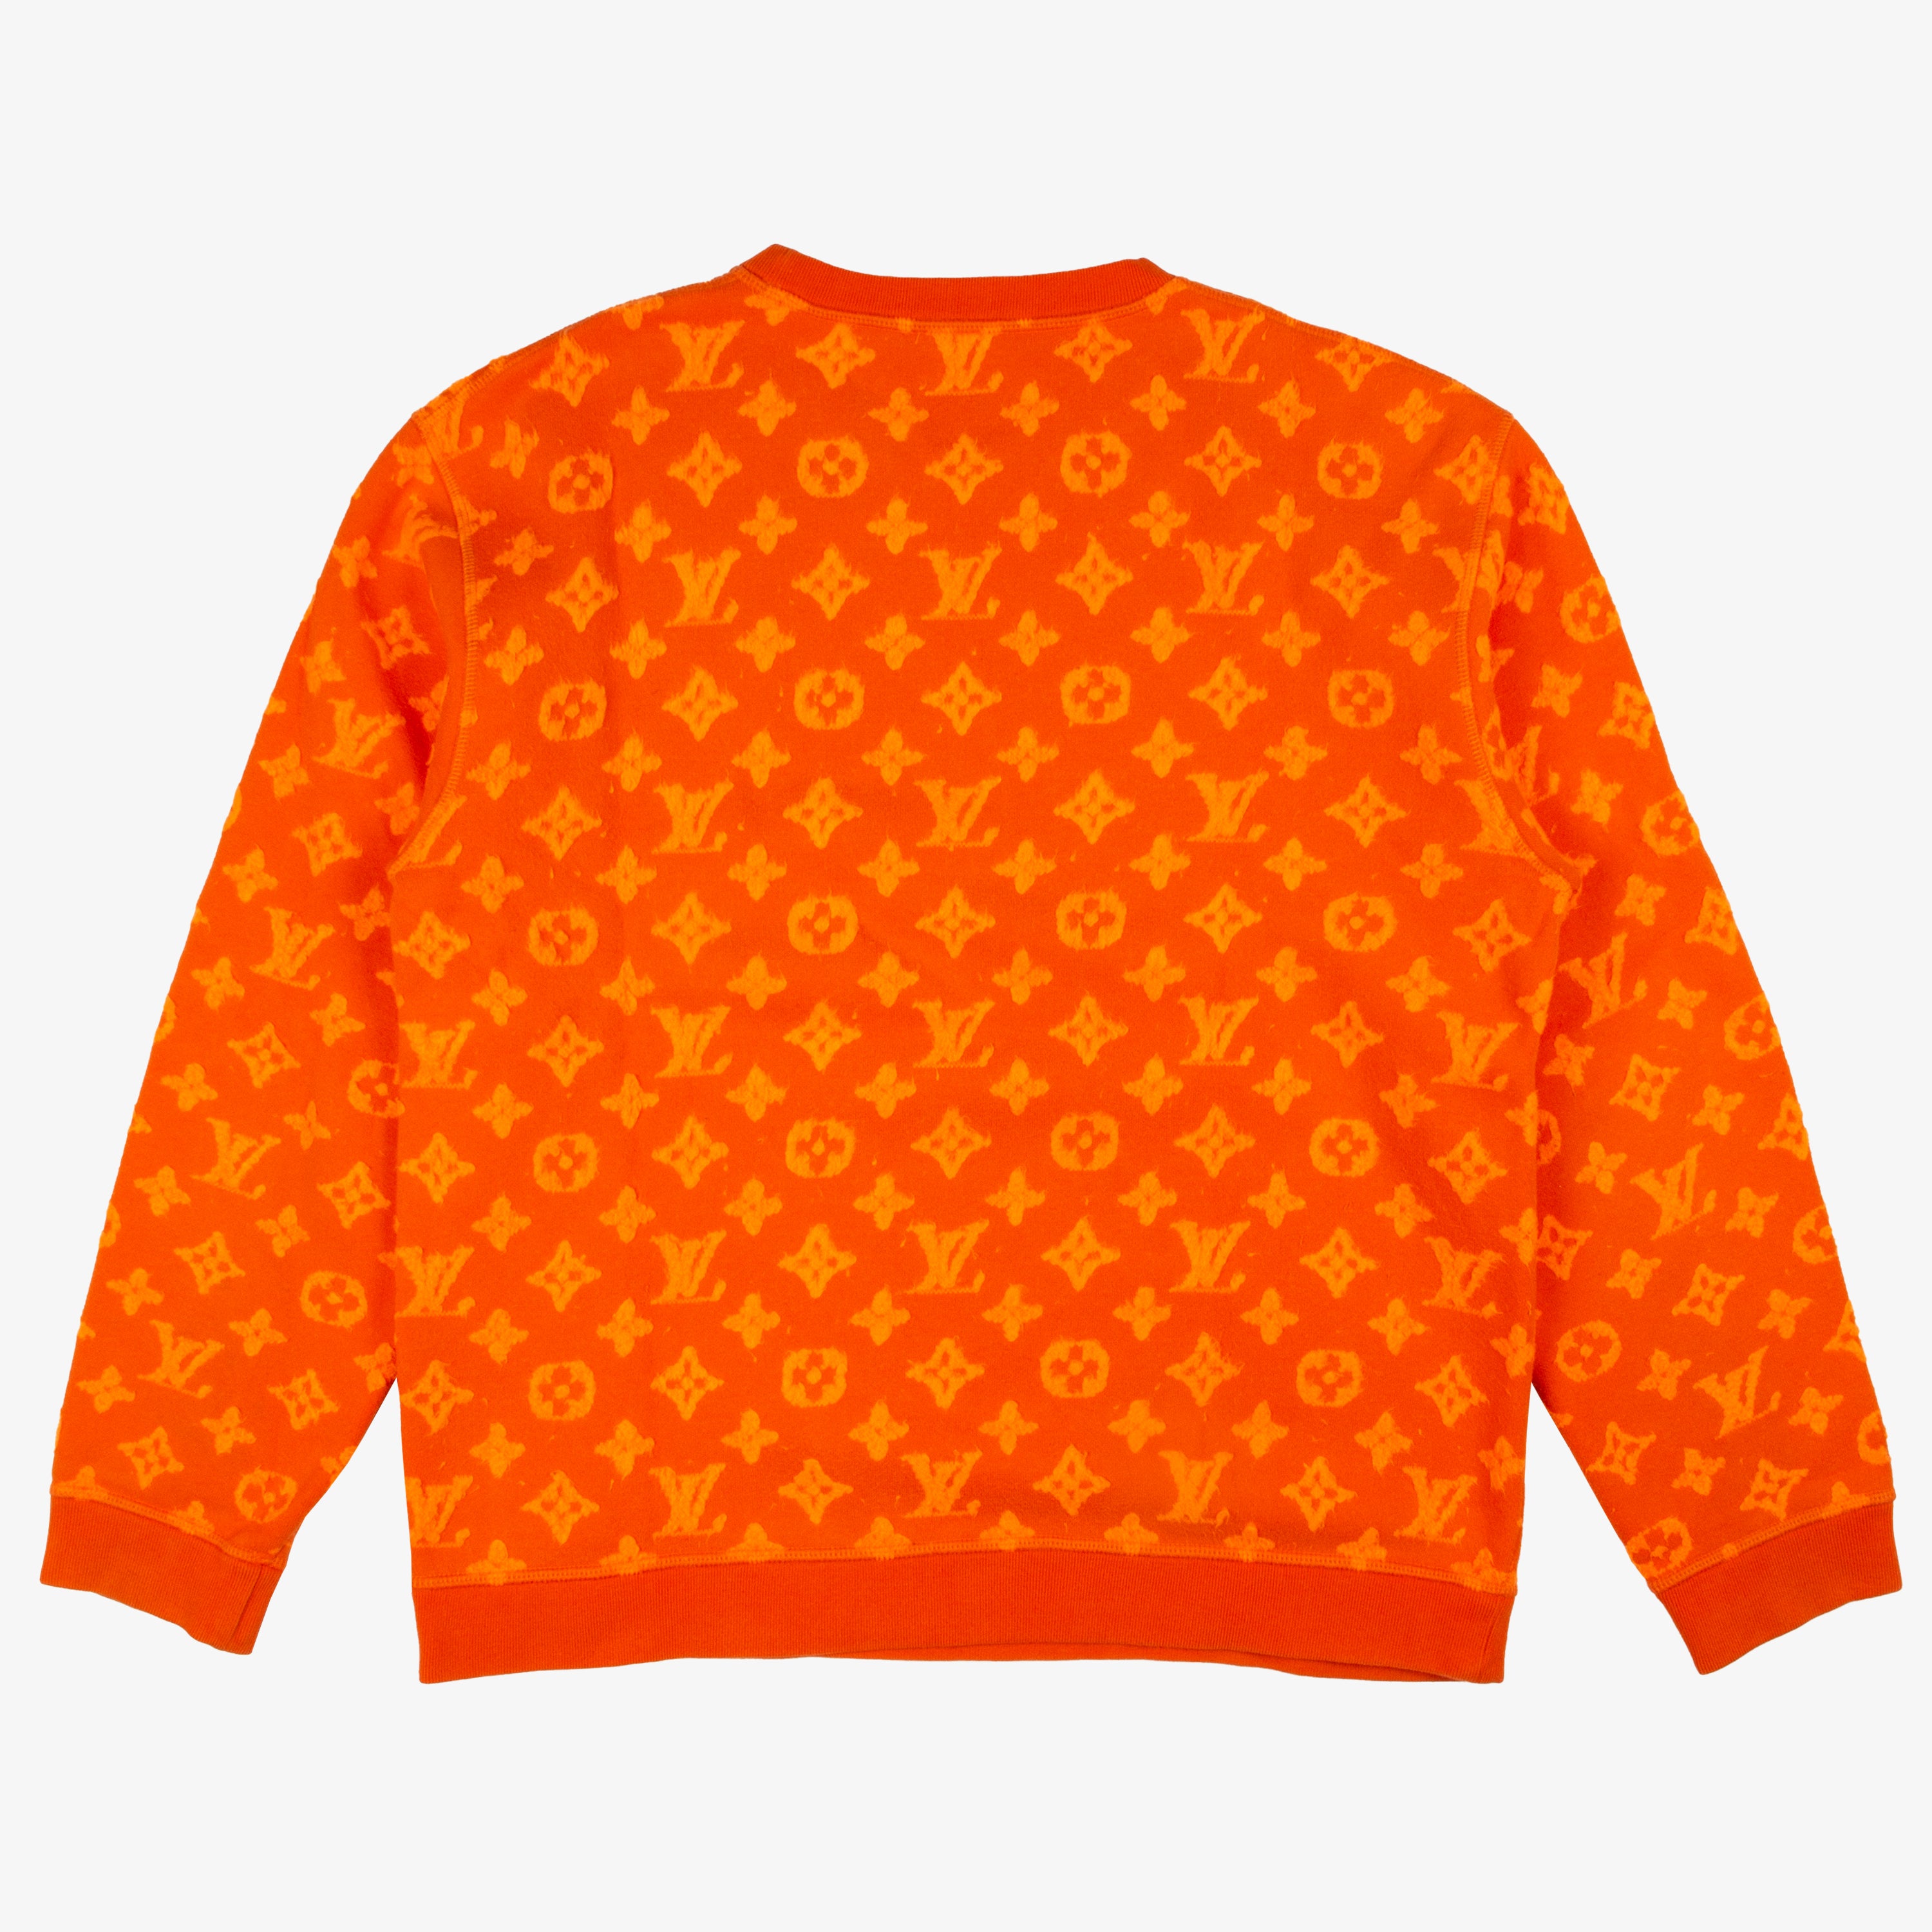 The sweatshirt Louis Vuitton Full Monogram orange worn by Samuel